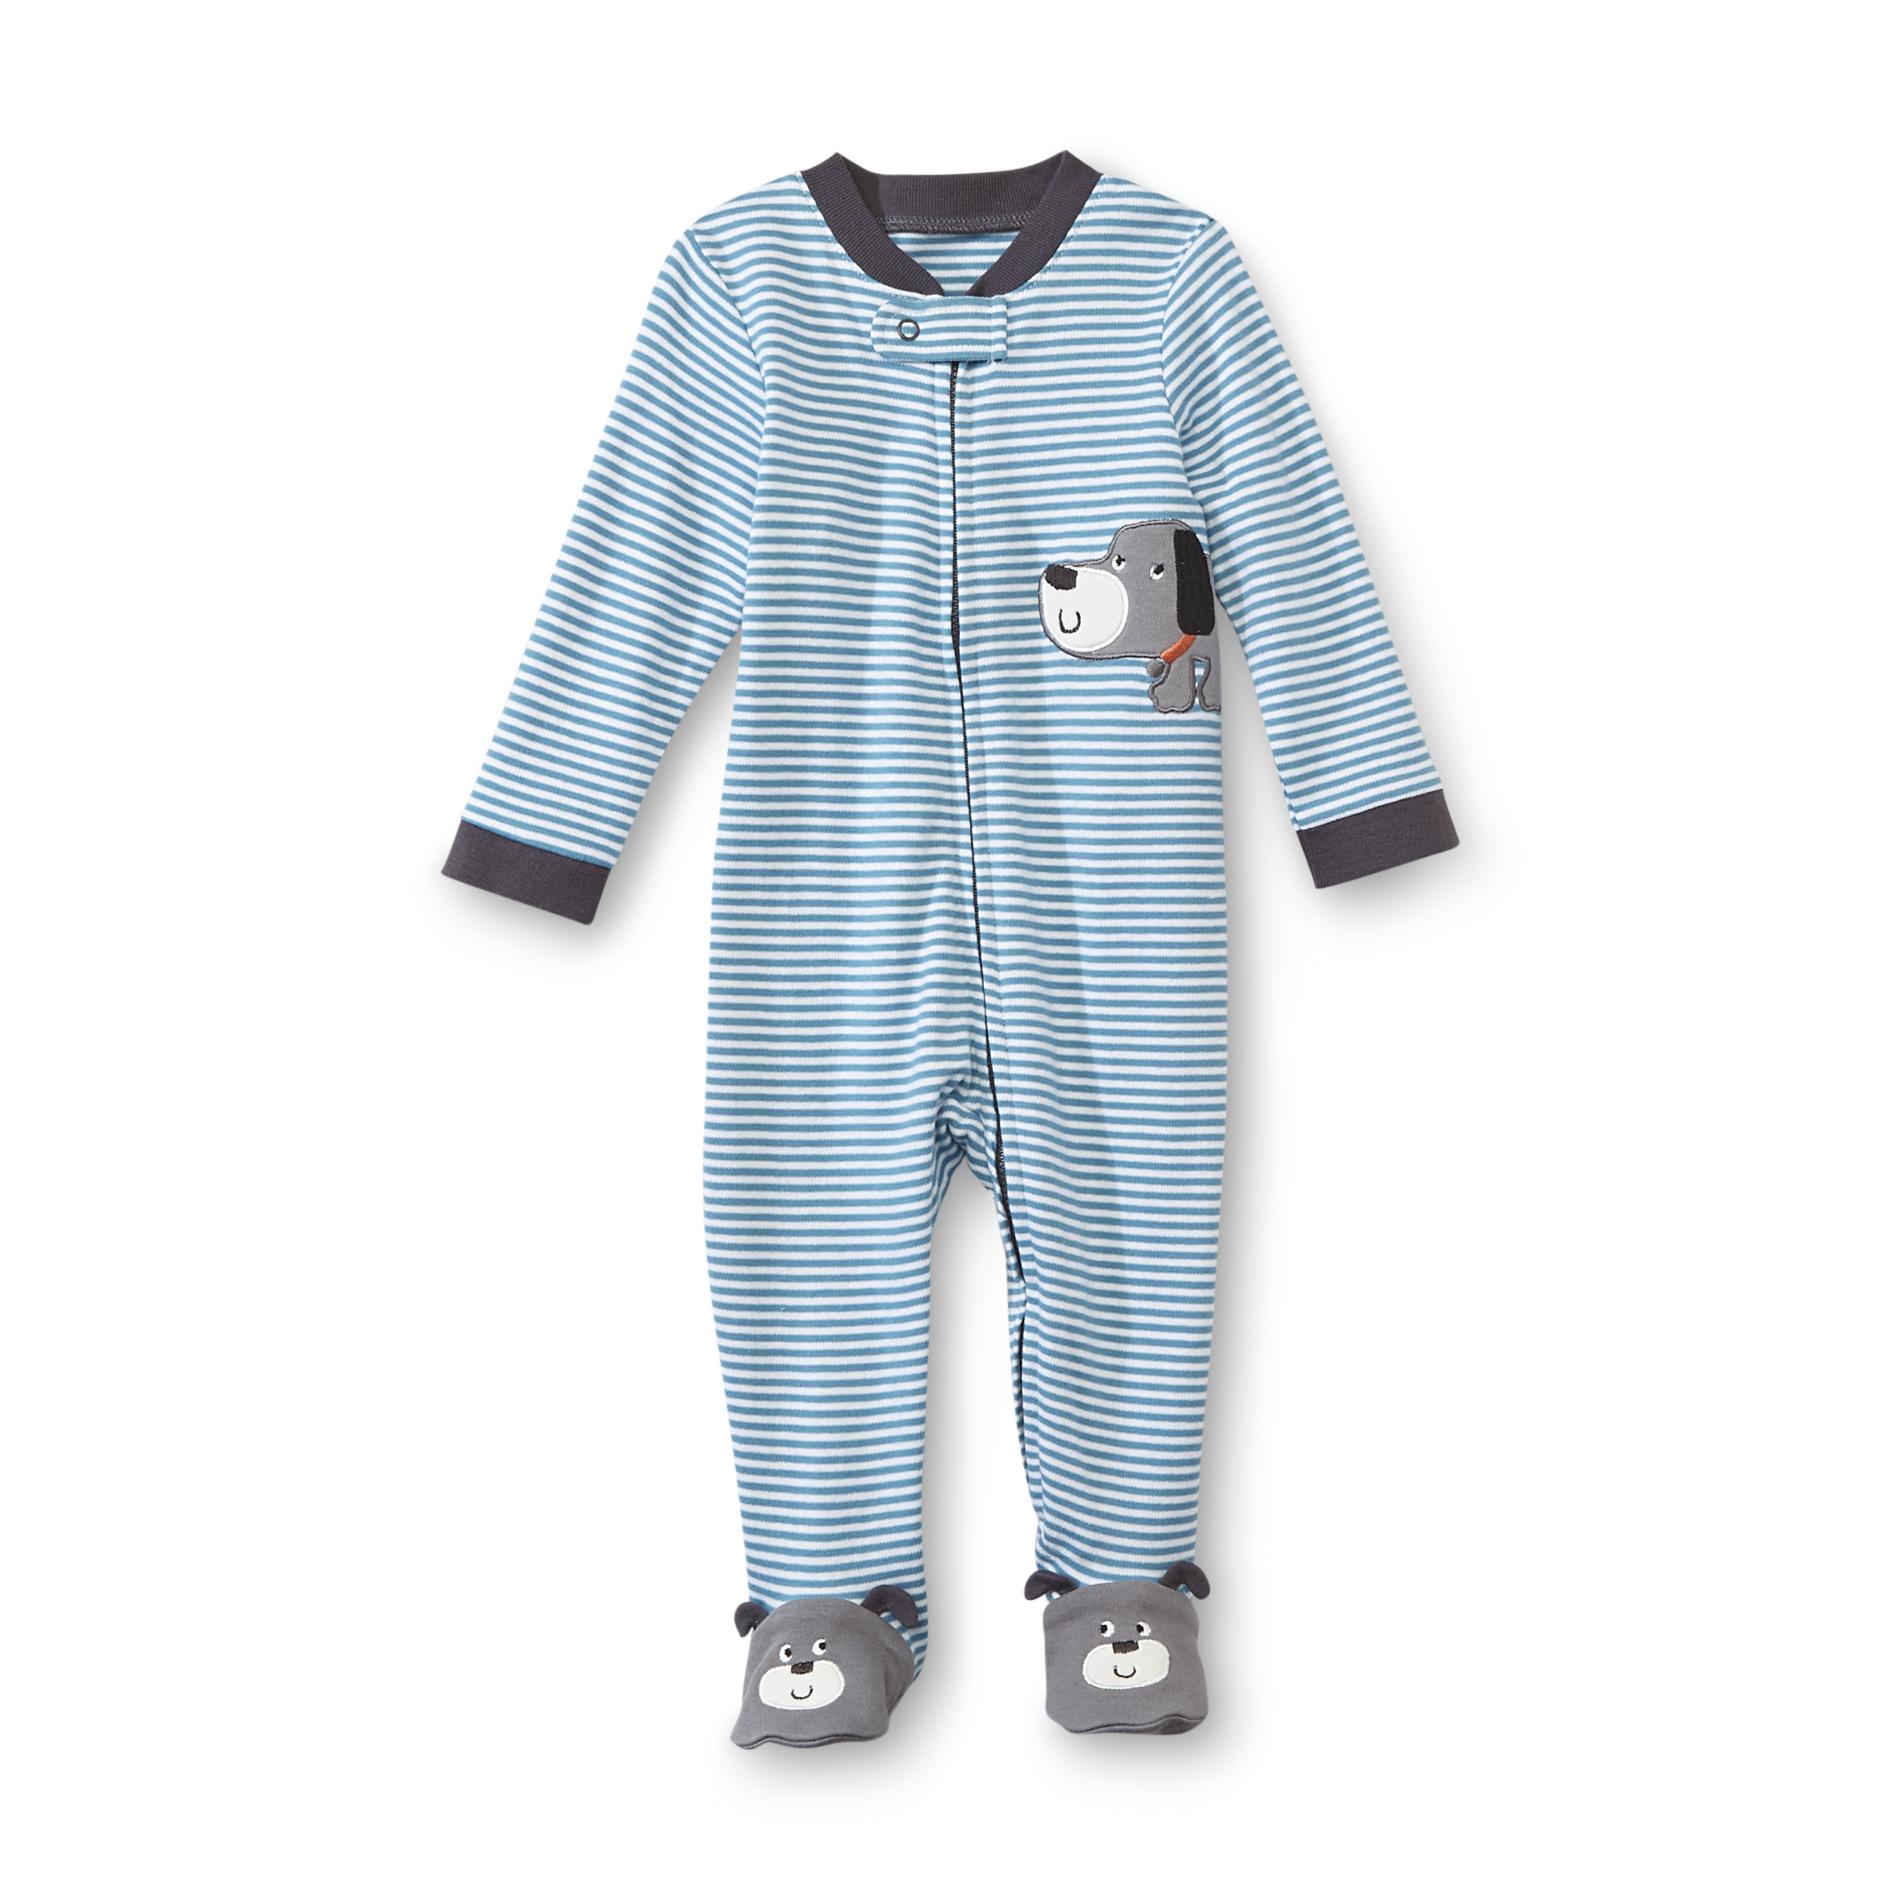 Small Wonders Newborn Boy's Striped Sleeper Pajamas - Dog